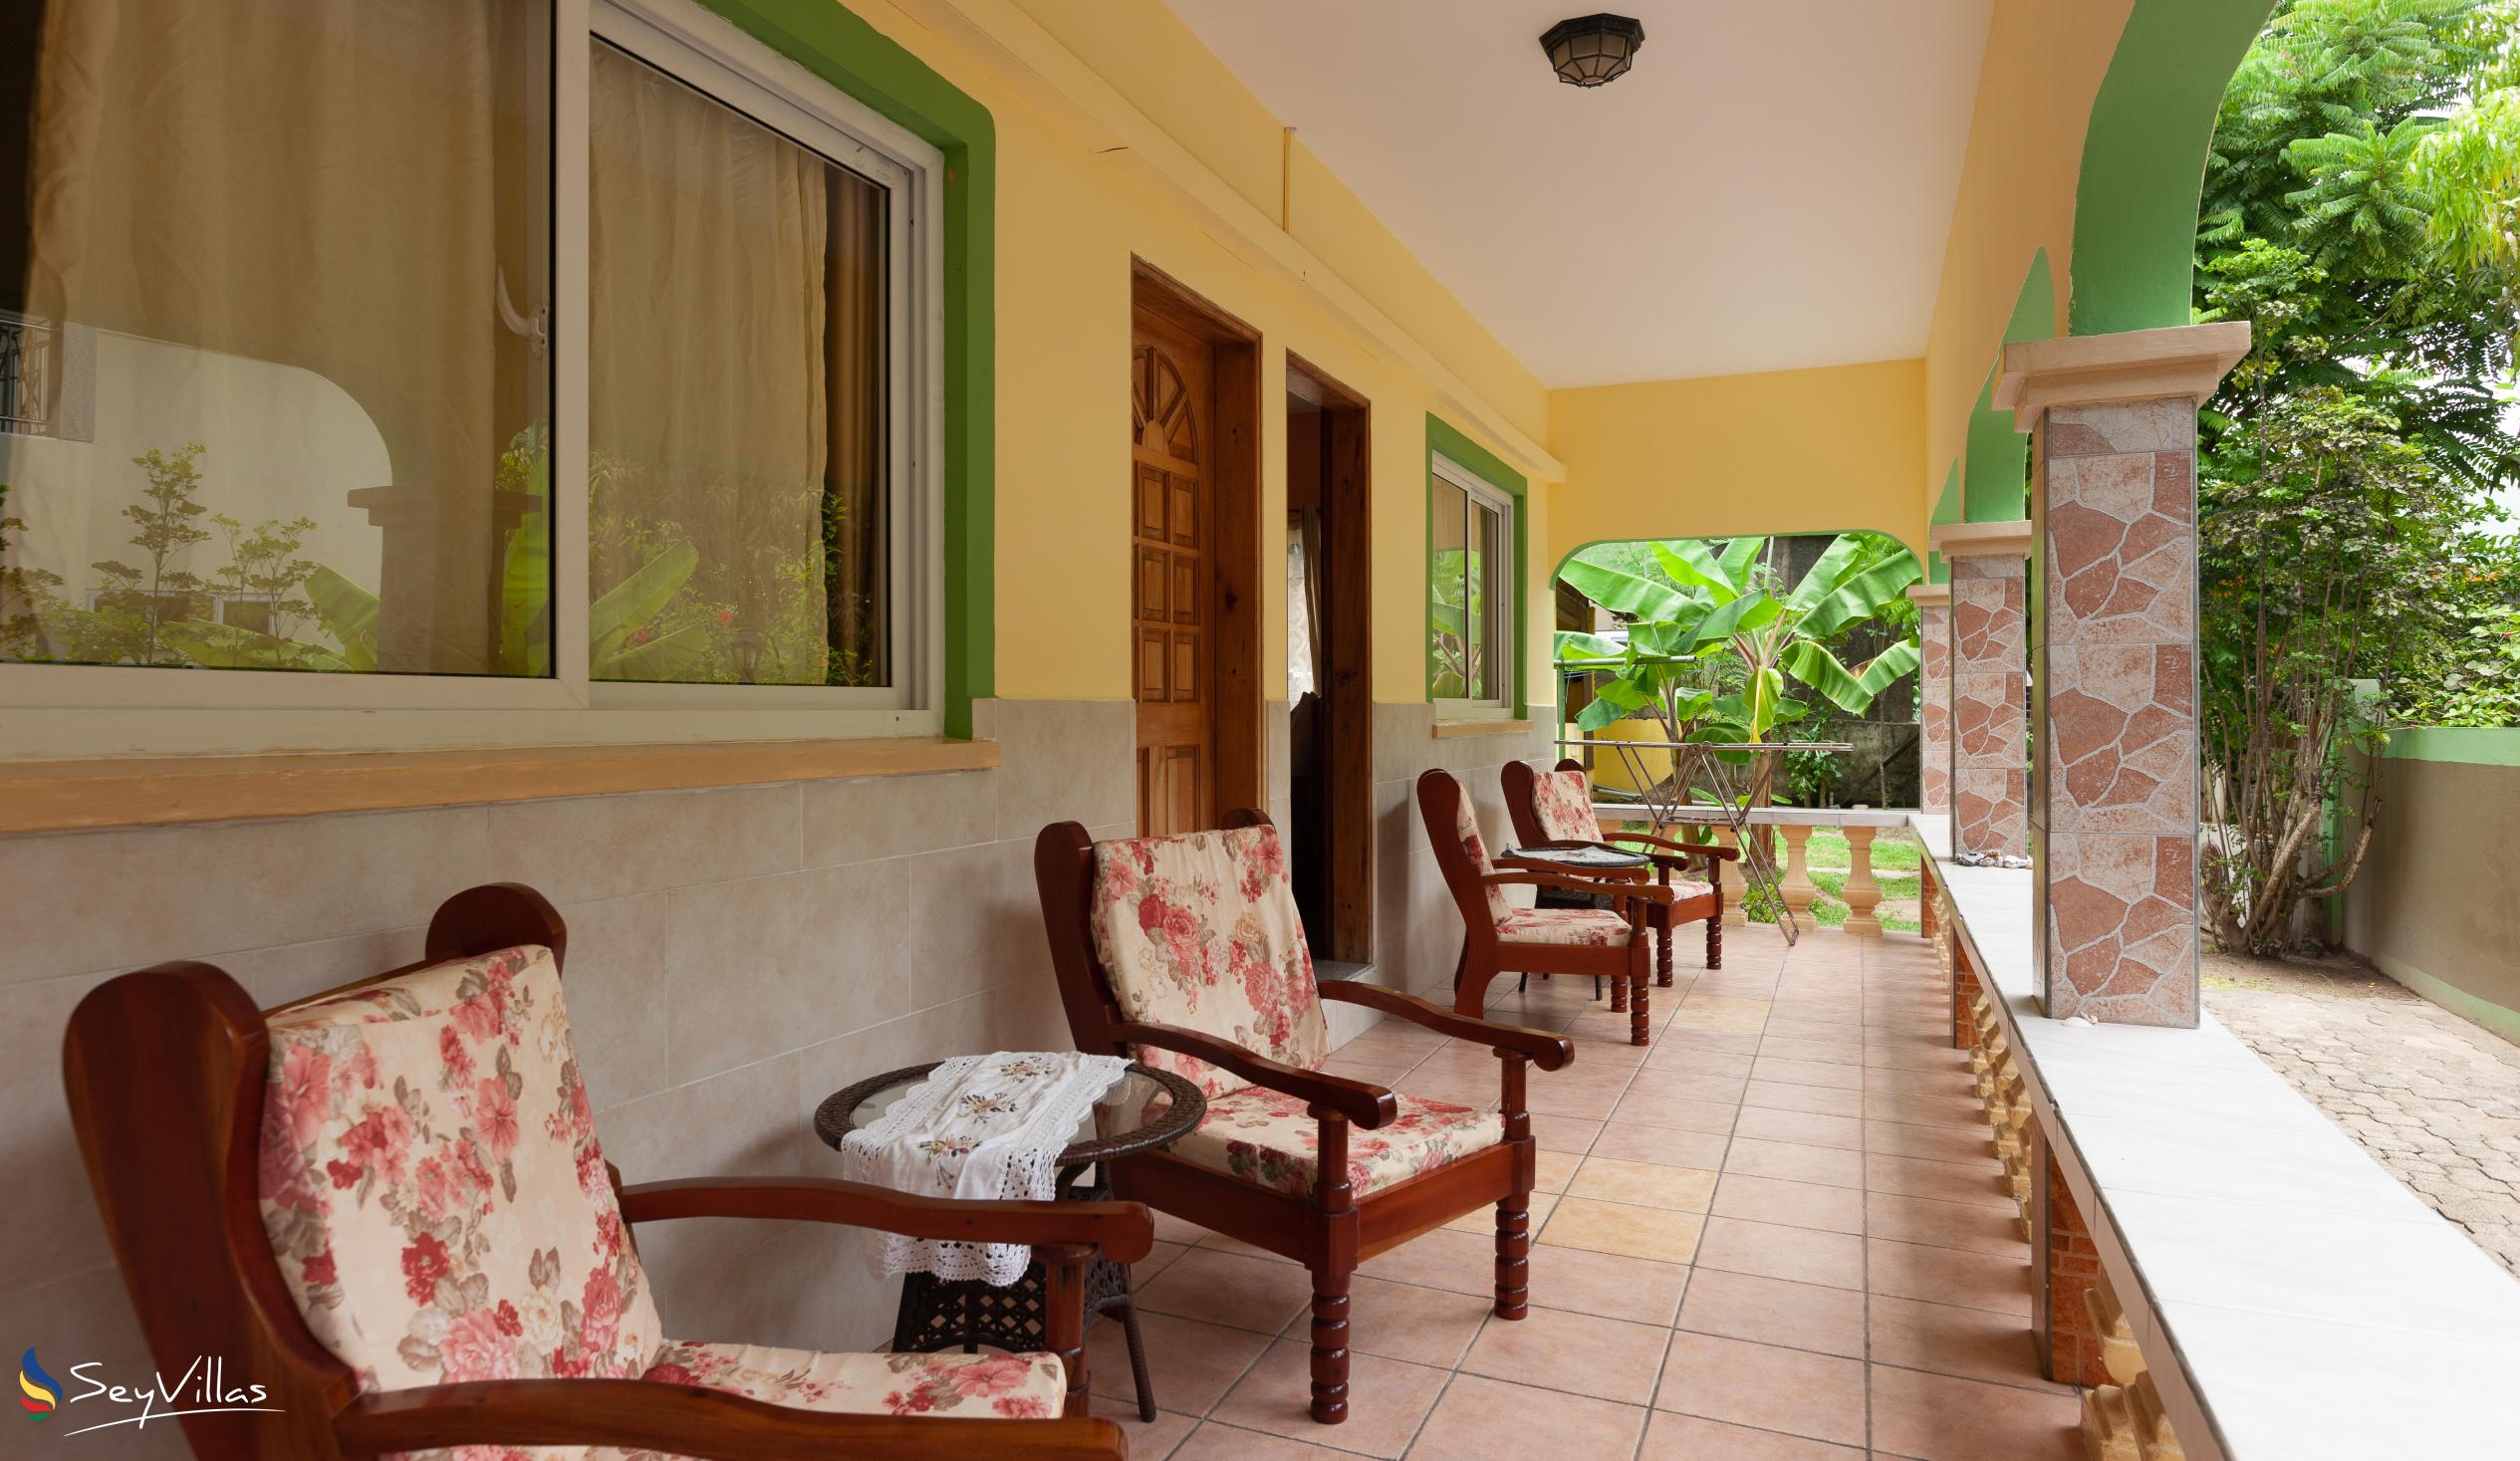 Photo 36: Villa Bananier - Indoor area - Praslin (Seychelles)